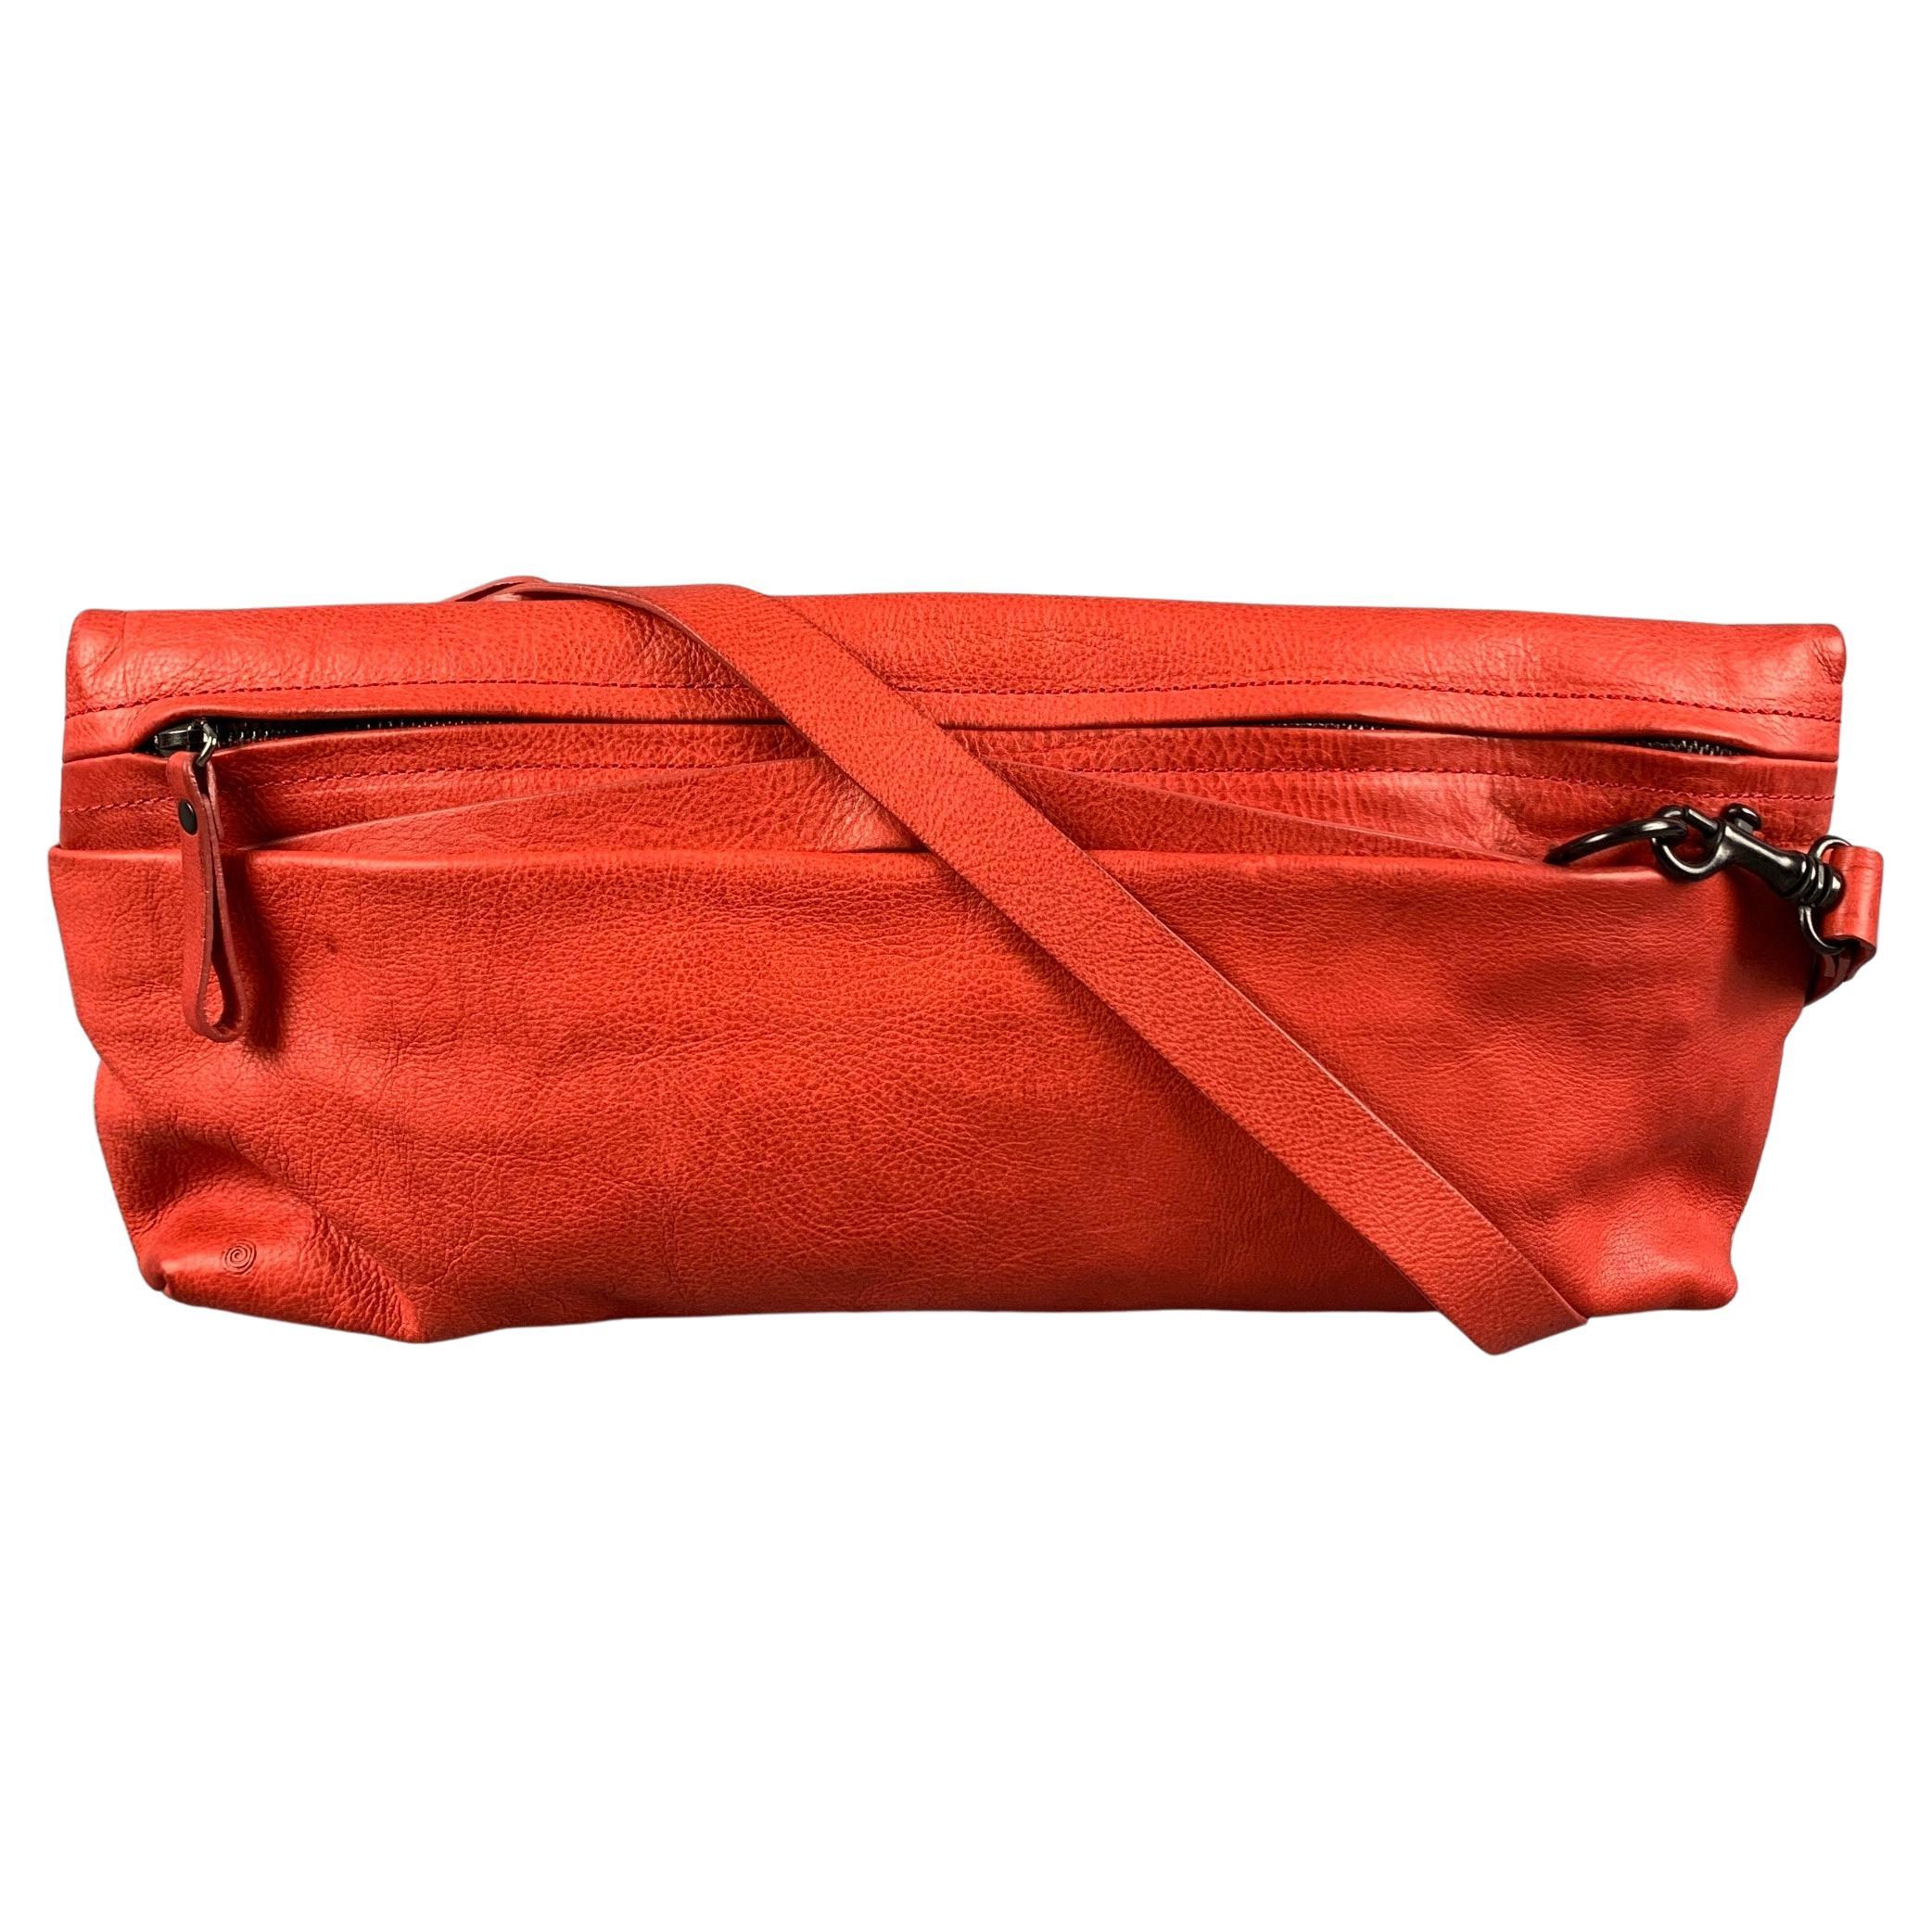 MARSELL Coral Leather Rectangle Shoulder Bag